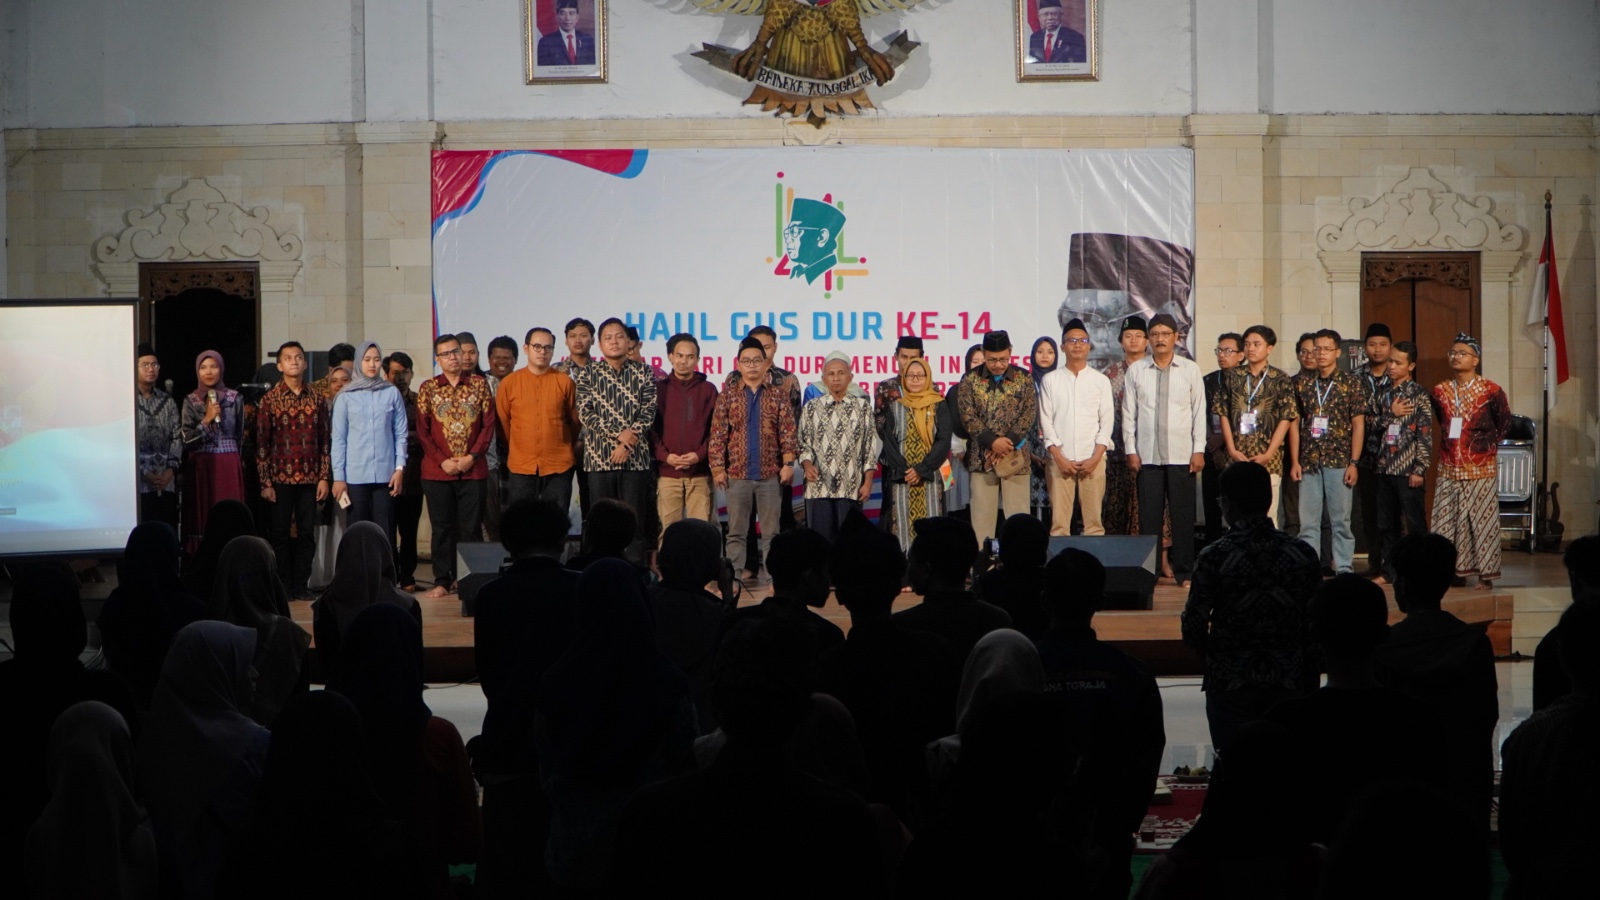 GUSDURian Yogyakarta menggelar talkshow bertajuk "Rasan-rasan Demokrasi: Desa Bisa Apa?" dalam rangka memperingati Haul Gus Dur ke-14.